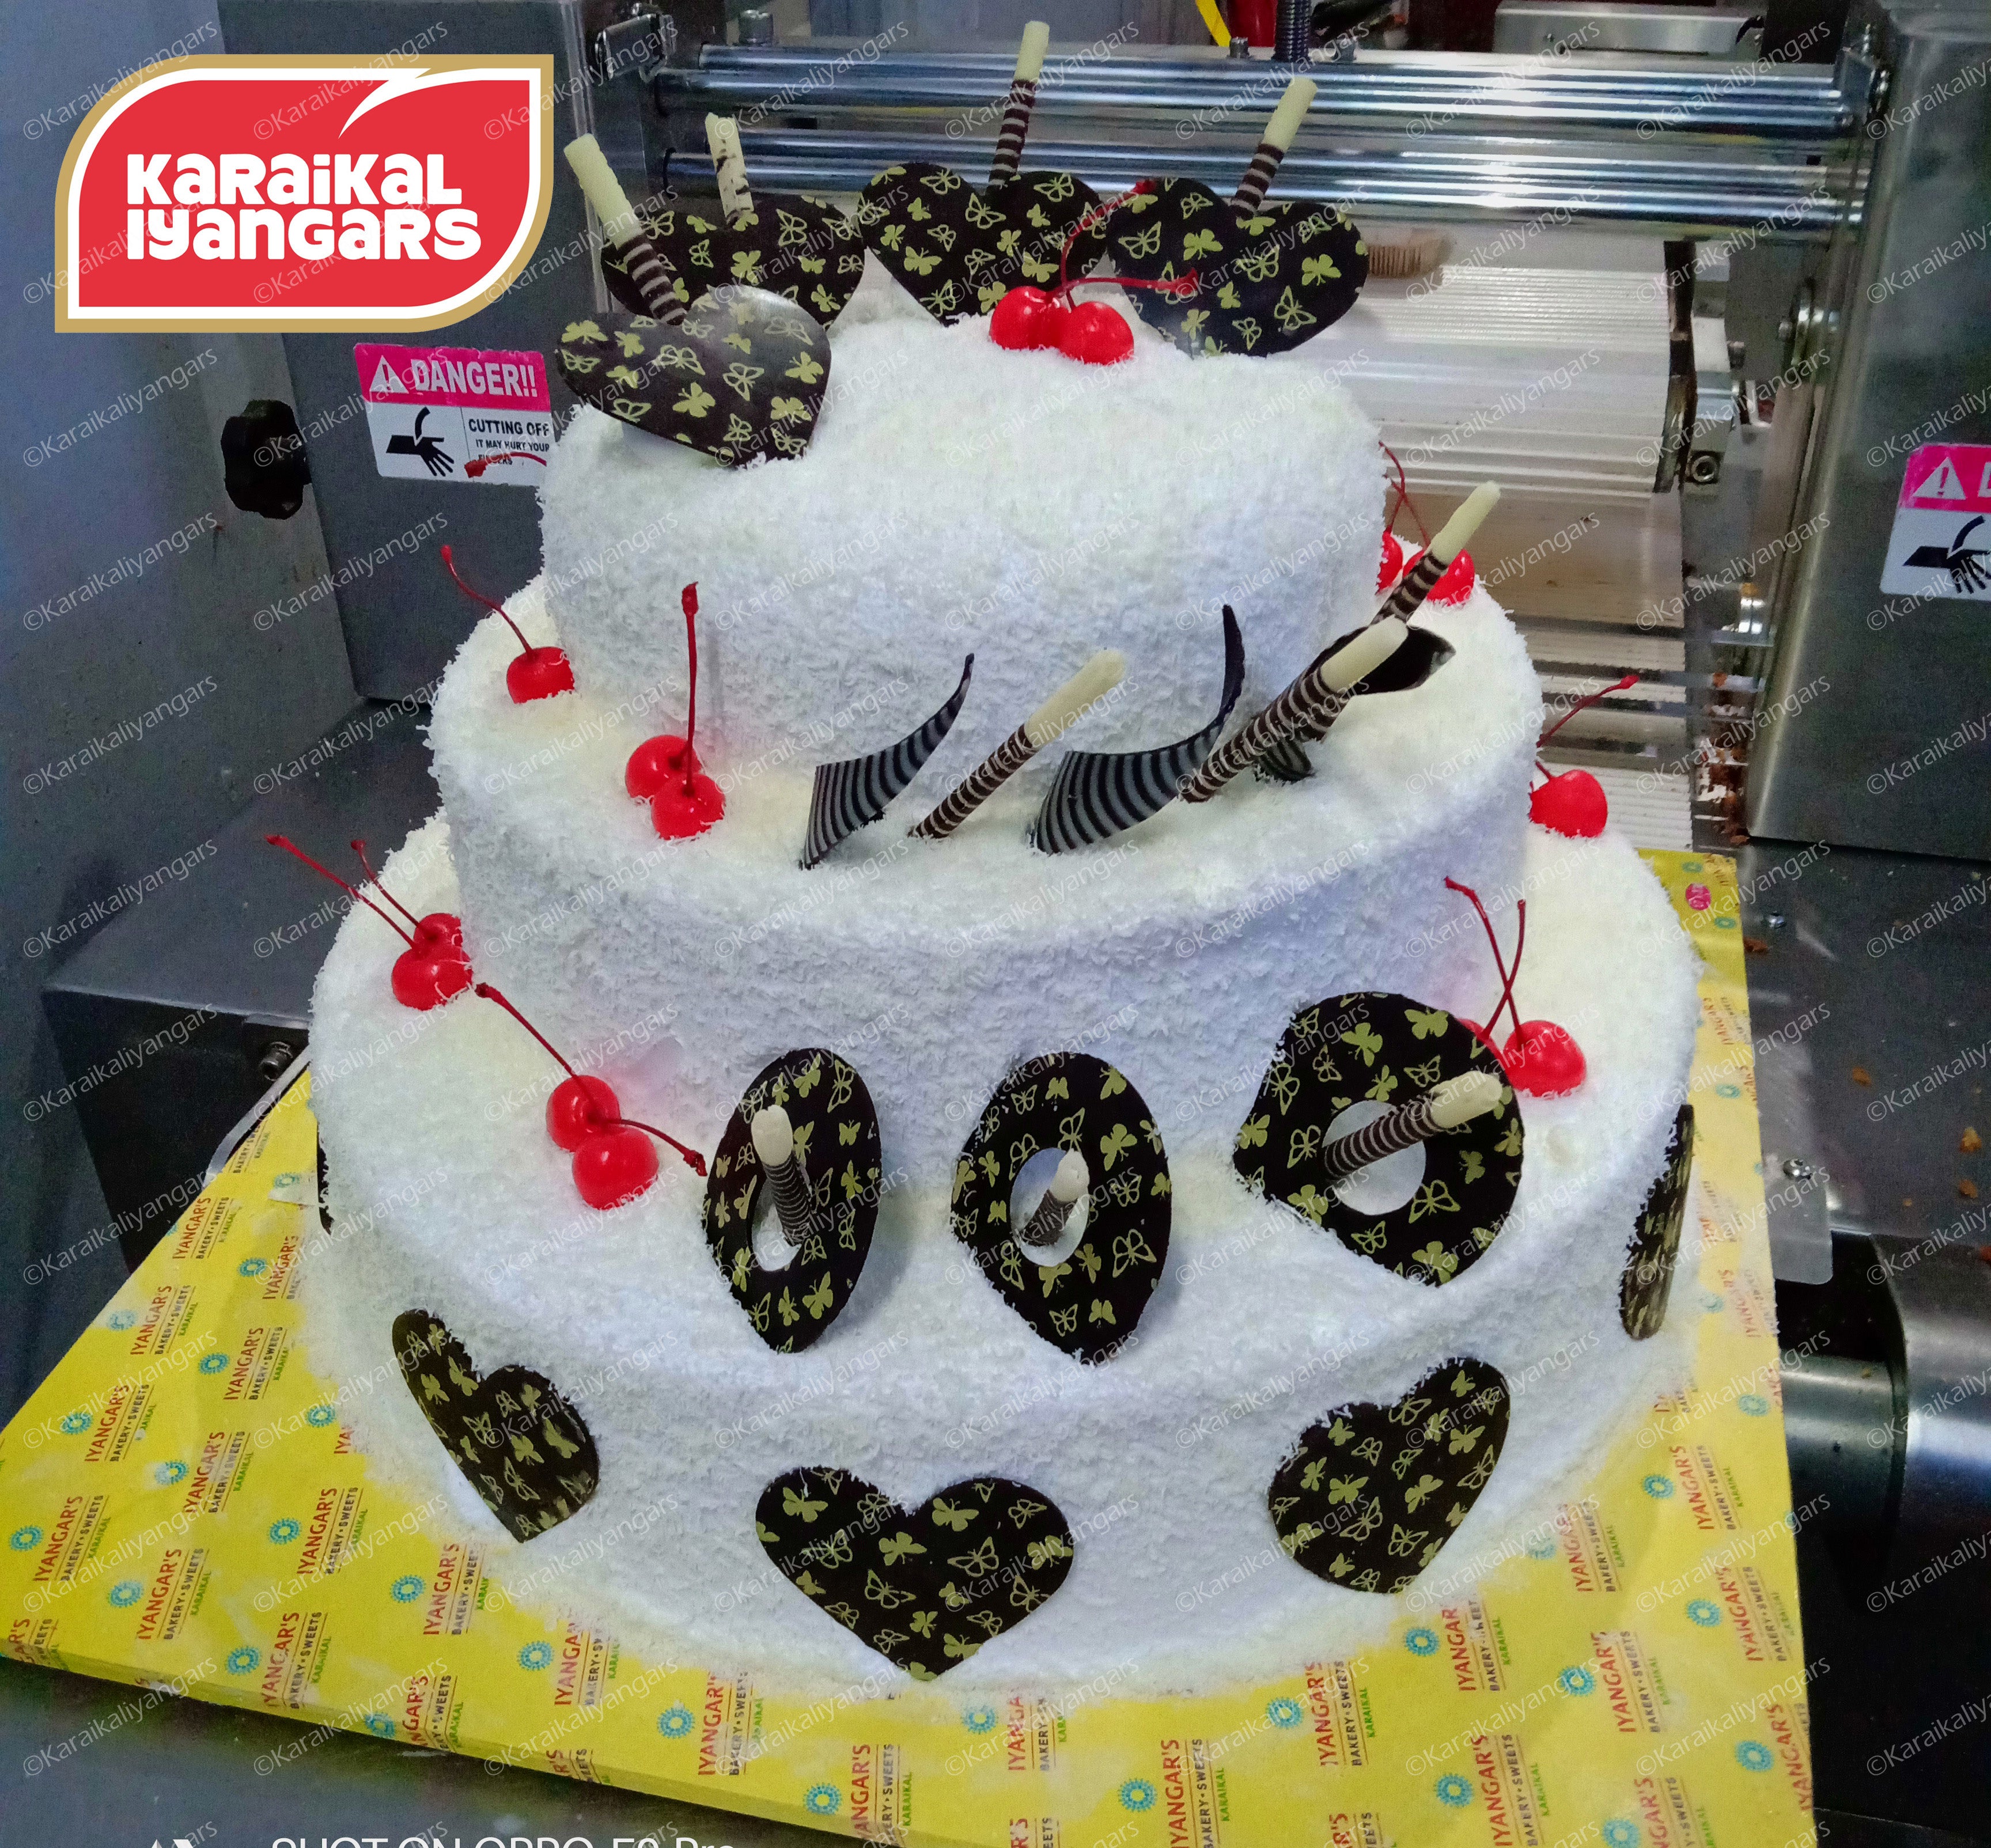 Tasty Bakery | Wedding Cakes - The Knot